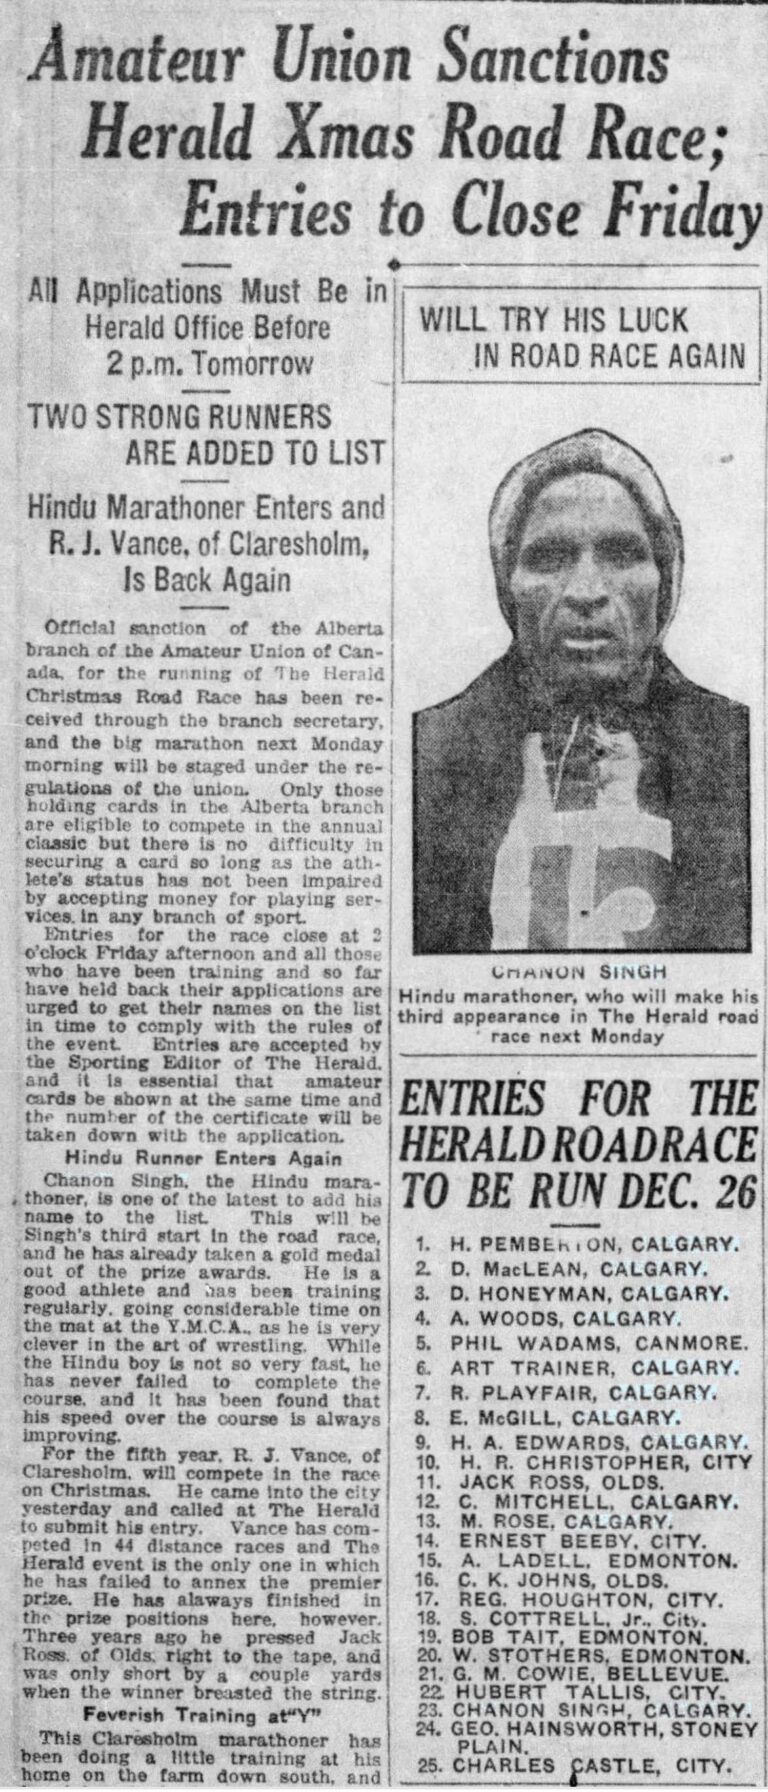 Chanon Singh, “Amateur Union Sanctions Herald Xmas Road Race,” Calgary Herald, 1921.